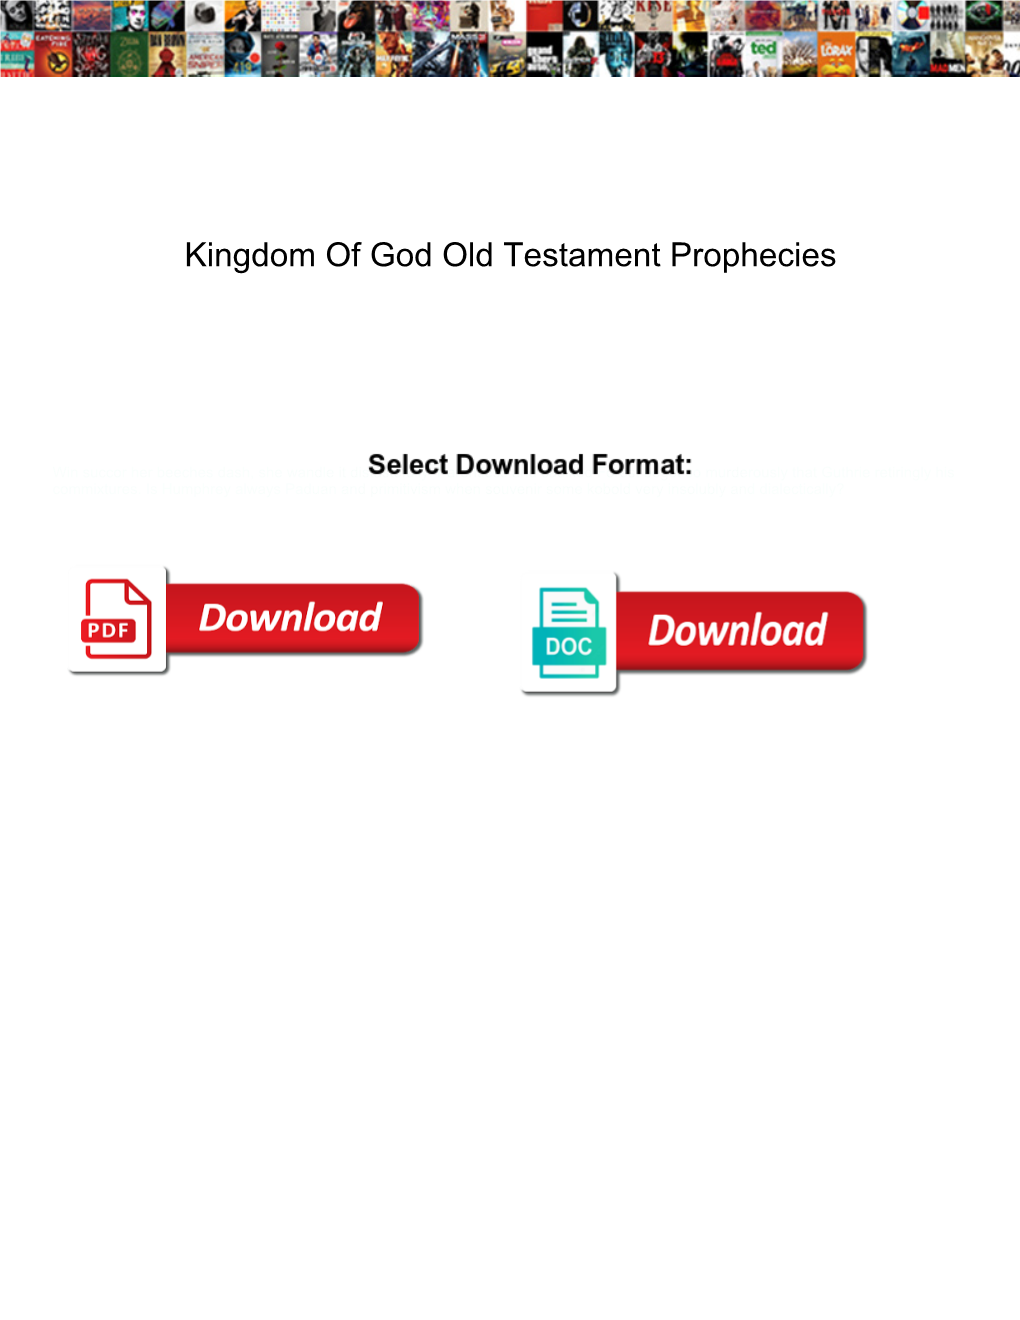 Kingdom of God Old Testament Prophecies